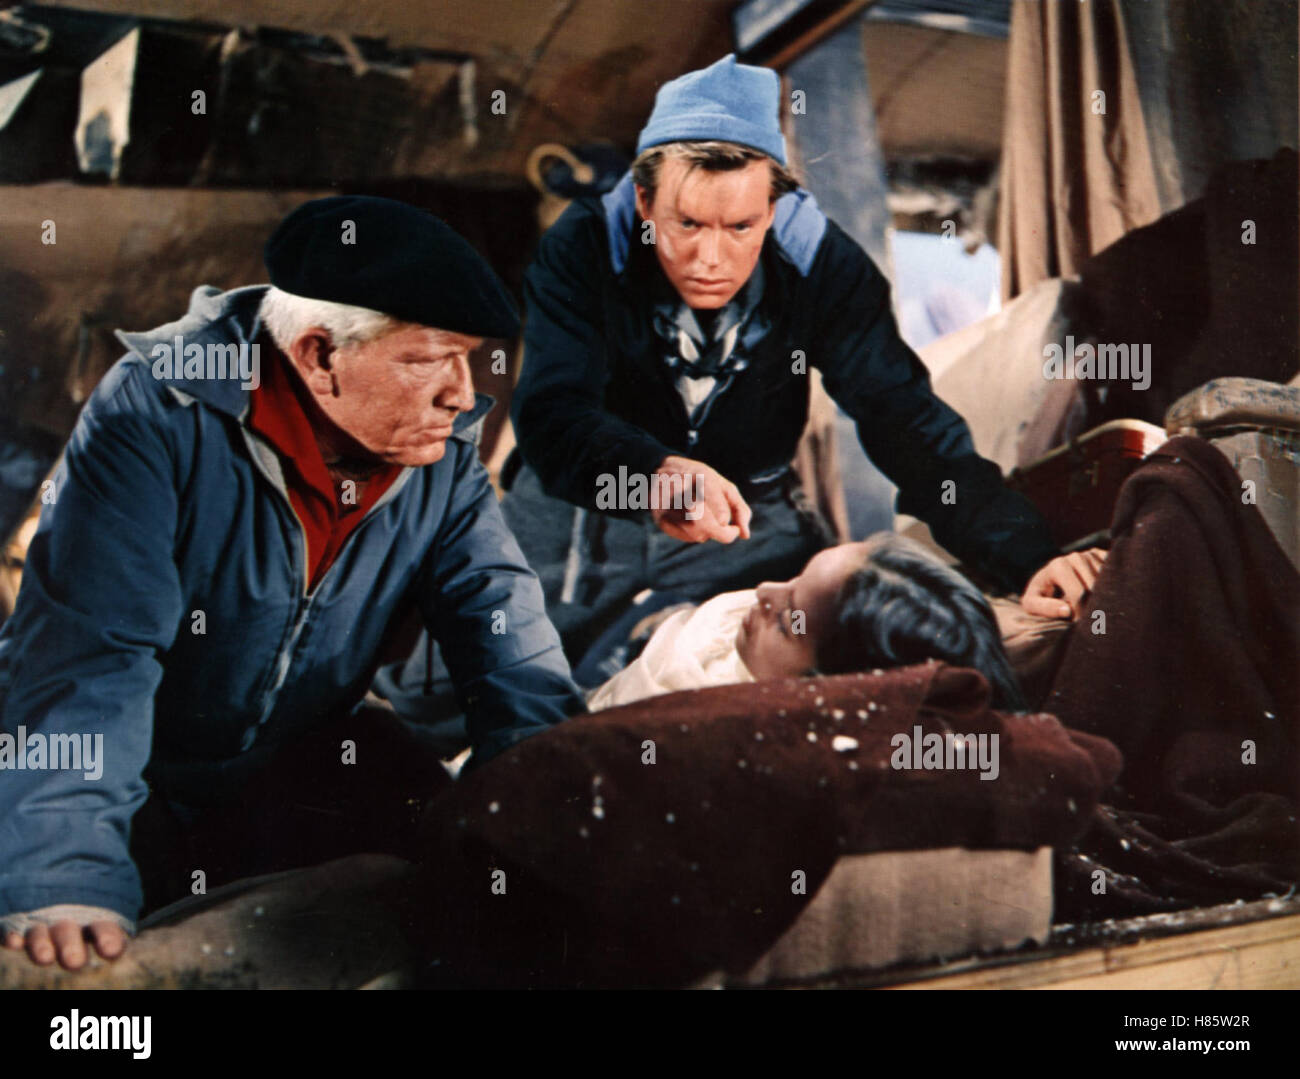 Der Berg der Versuchung, (THE MOUNTAIN) USA 1956, Regie: Edward Dmytryk, SPENCER TRACY, ROBERT WAGNER, ANNA KASHFI Stock Photo